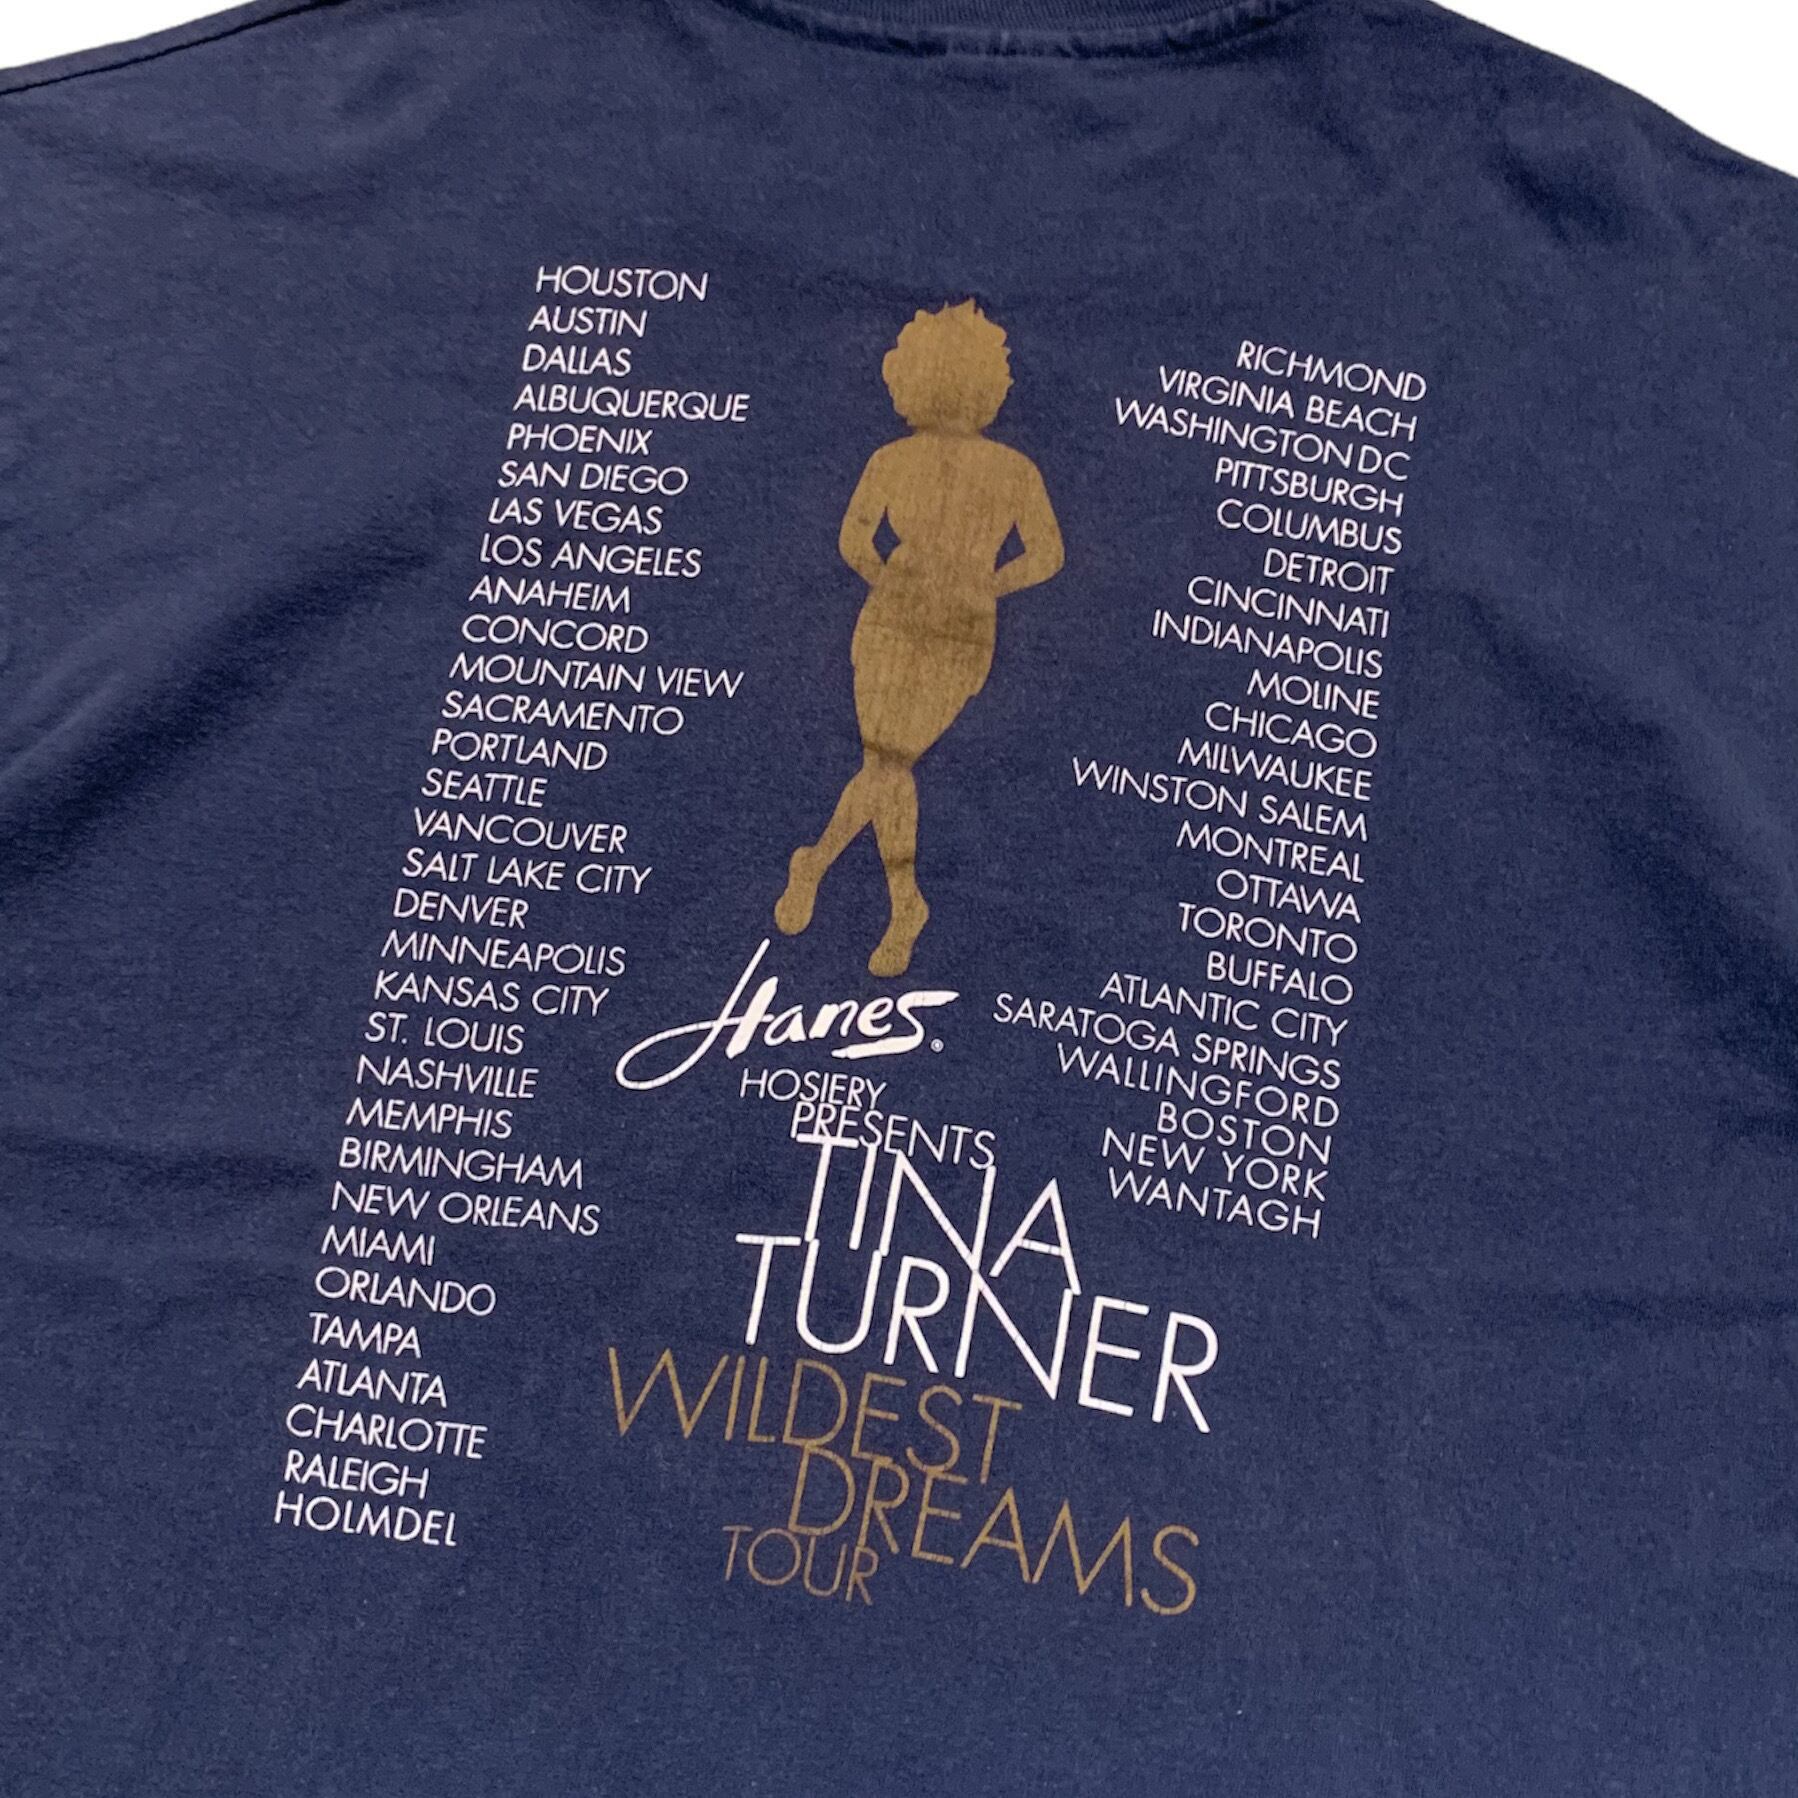 90's Tina Turner Wildest Dreams Tour Tee L / ティナ ターナー アーティスト ツアー オフィシャル  Tシャツ 古着